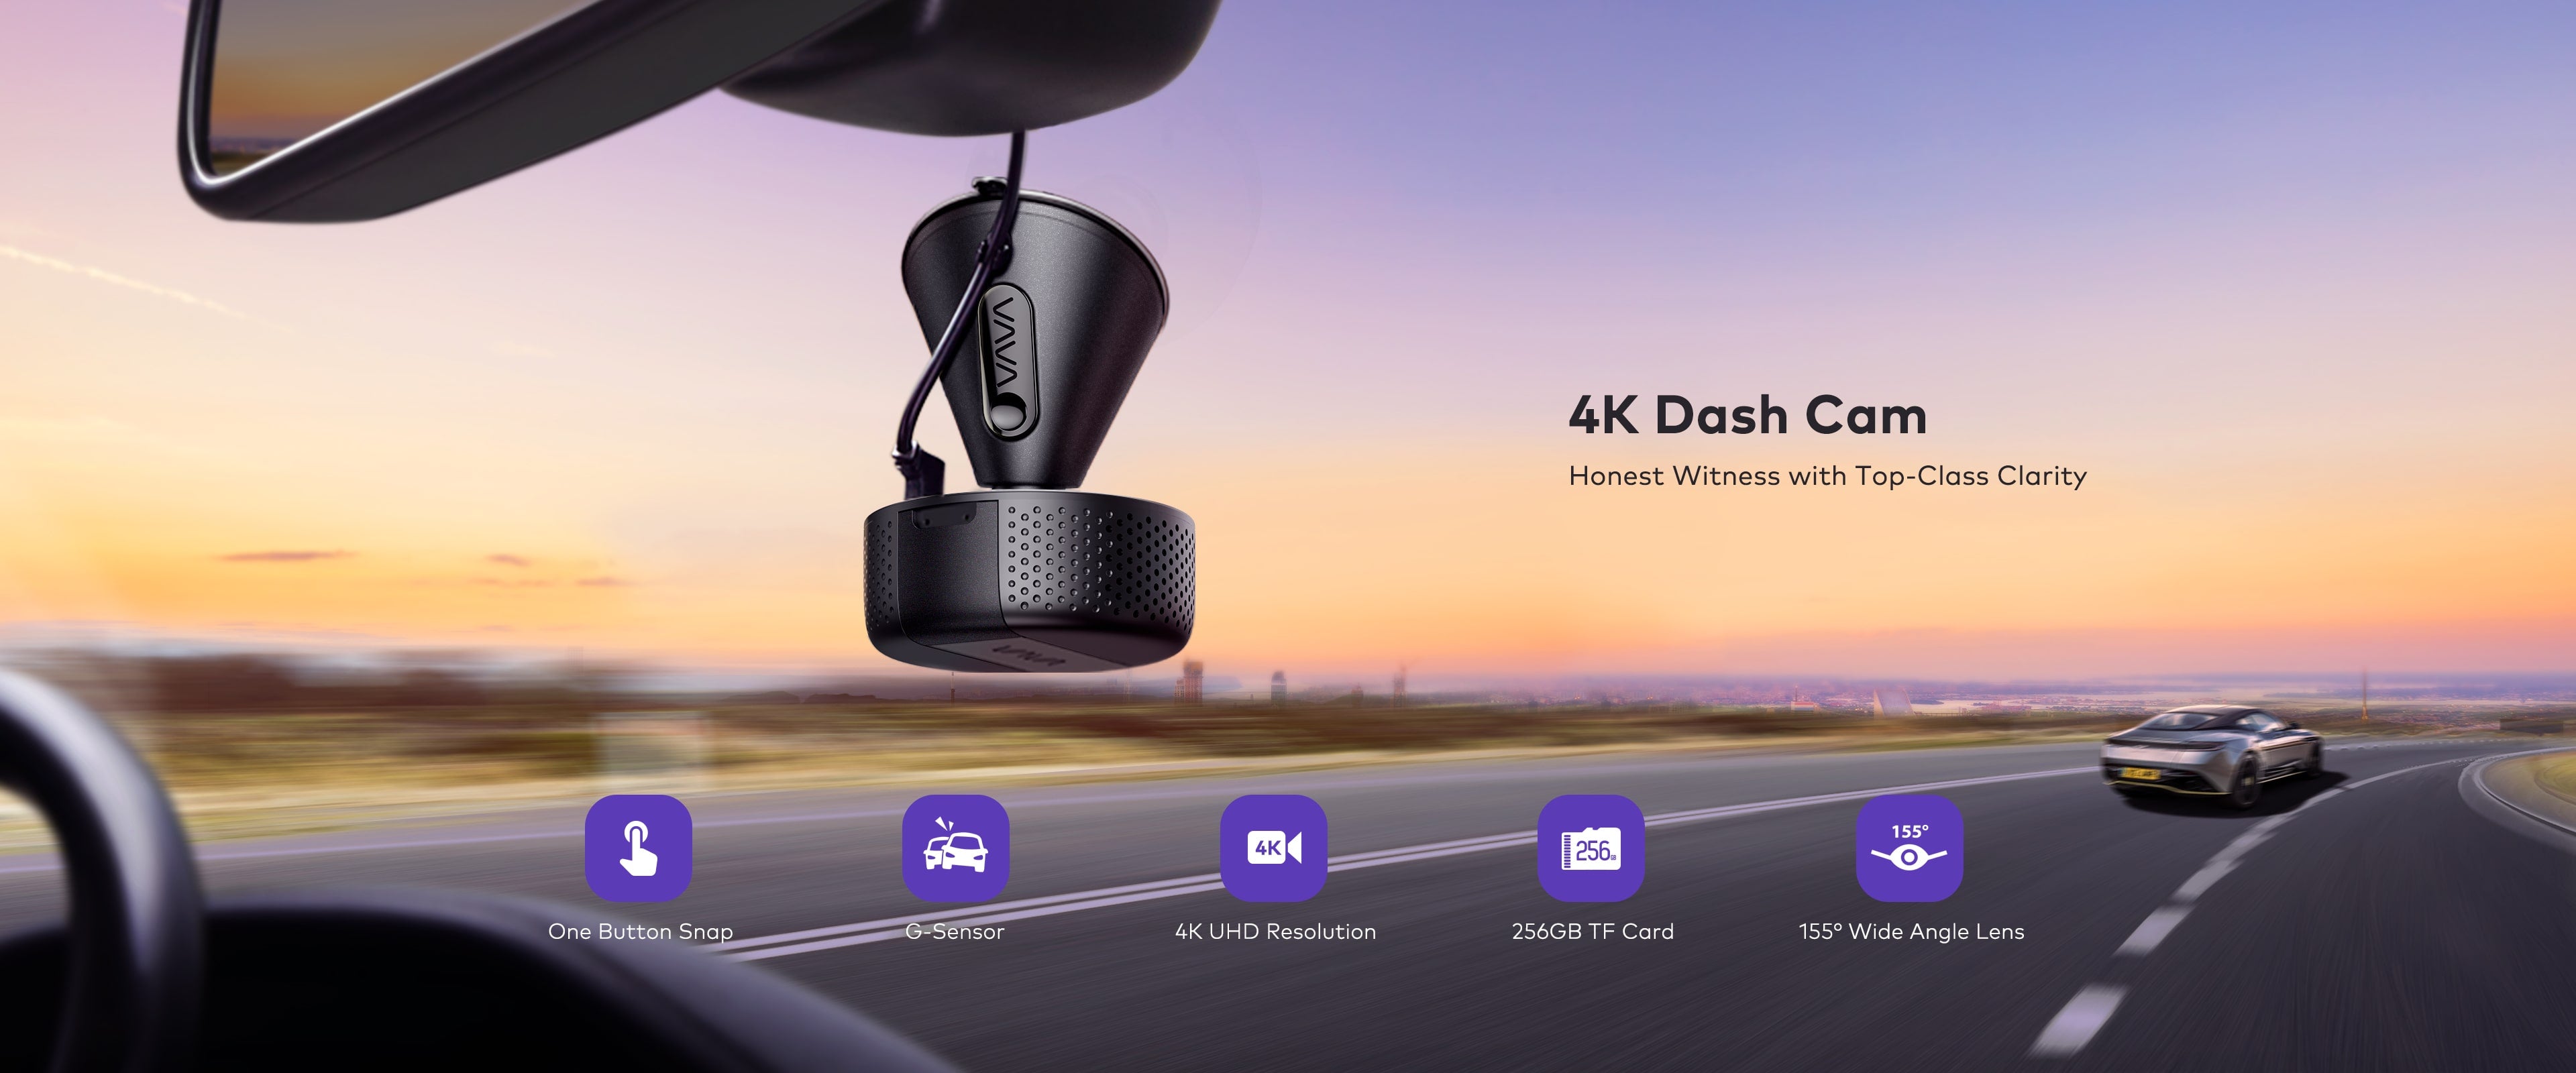 4K Dash Camera With Sony Night Vision -VAVA